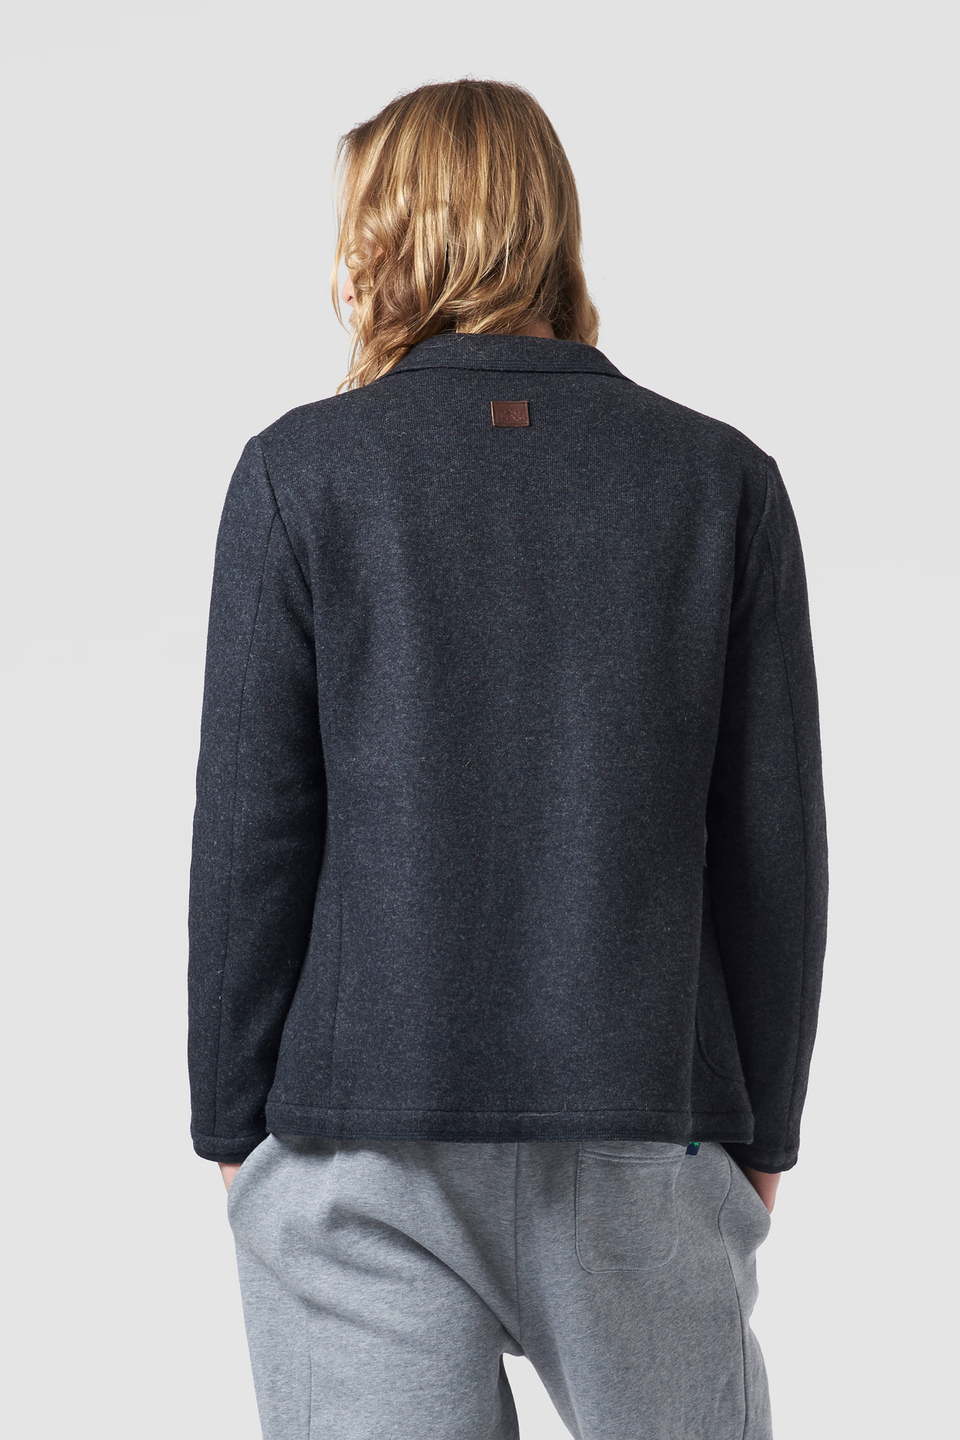 Wool-blend blazer | La Martina - Official Online Shop